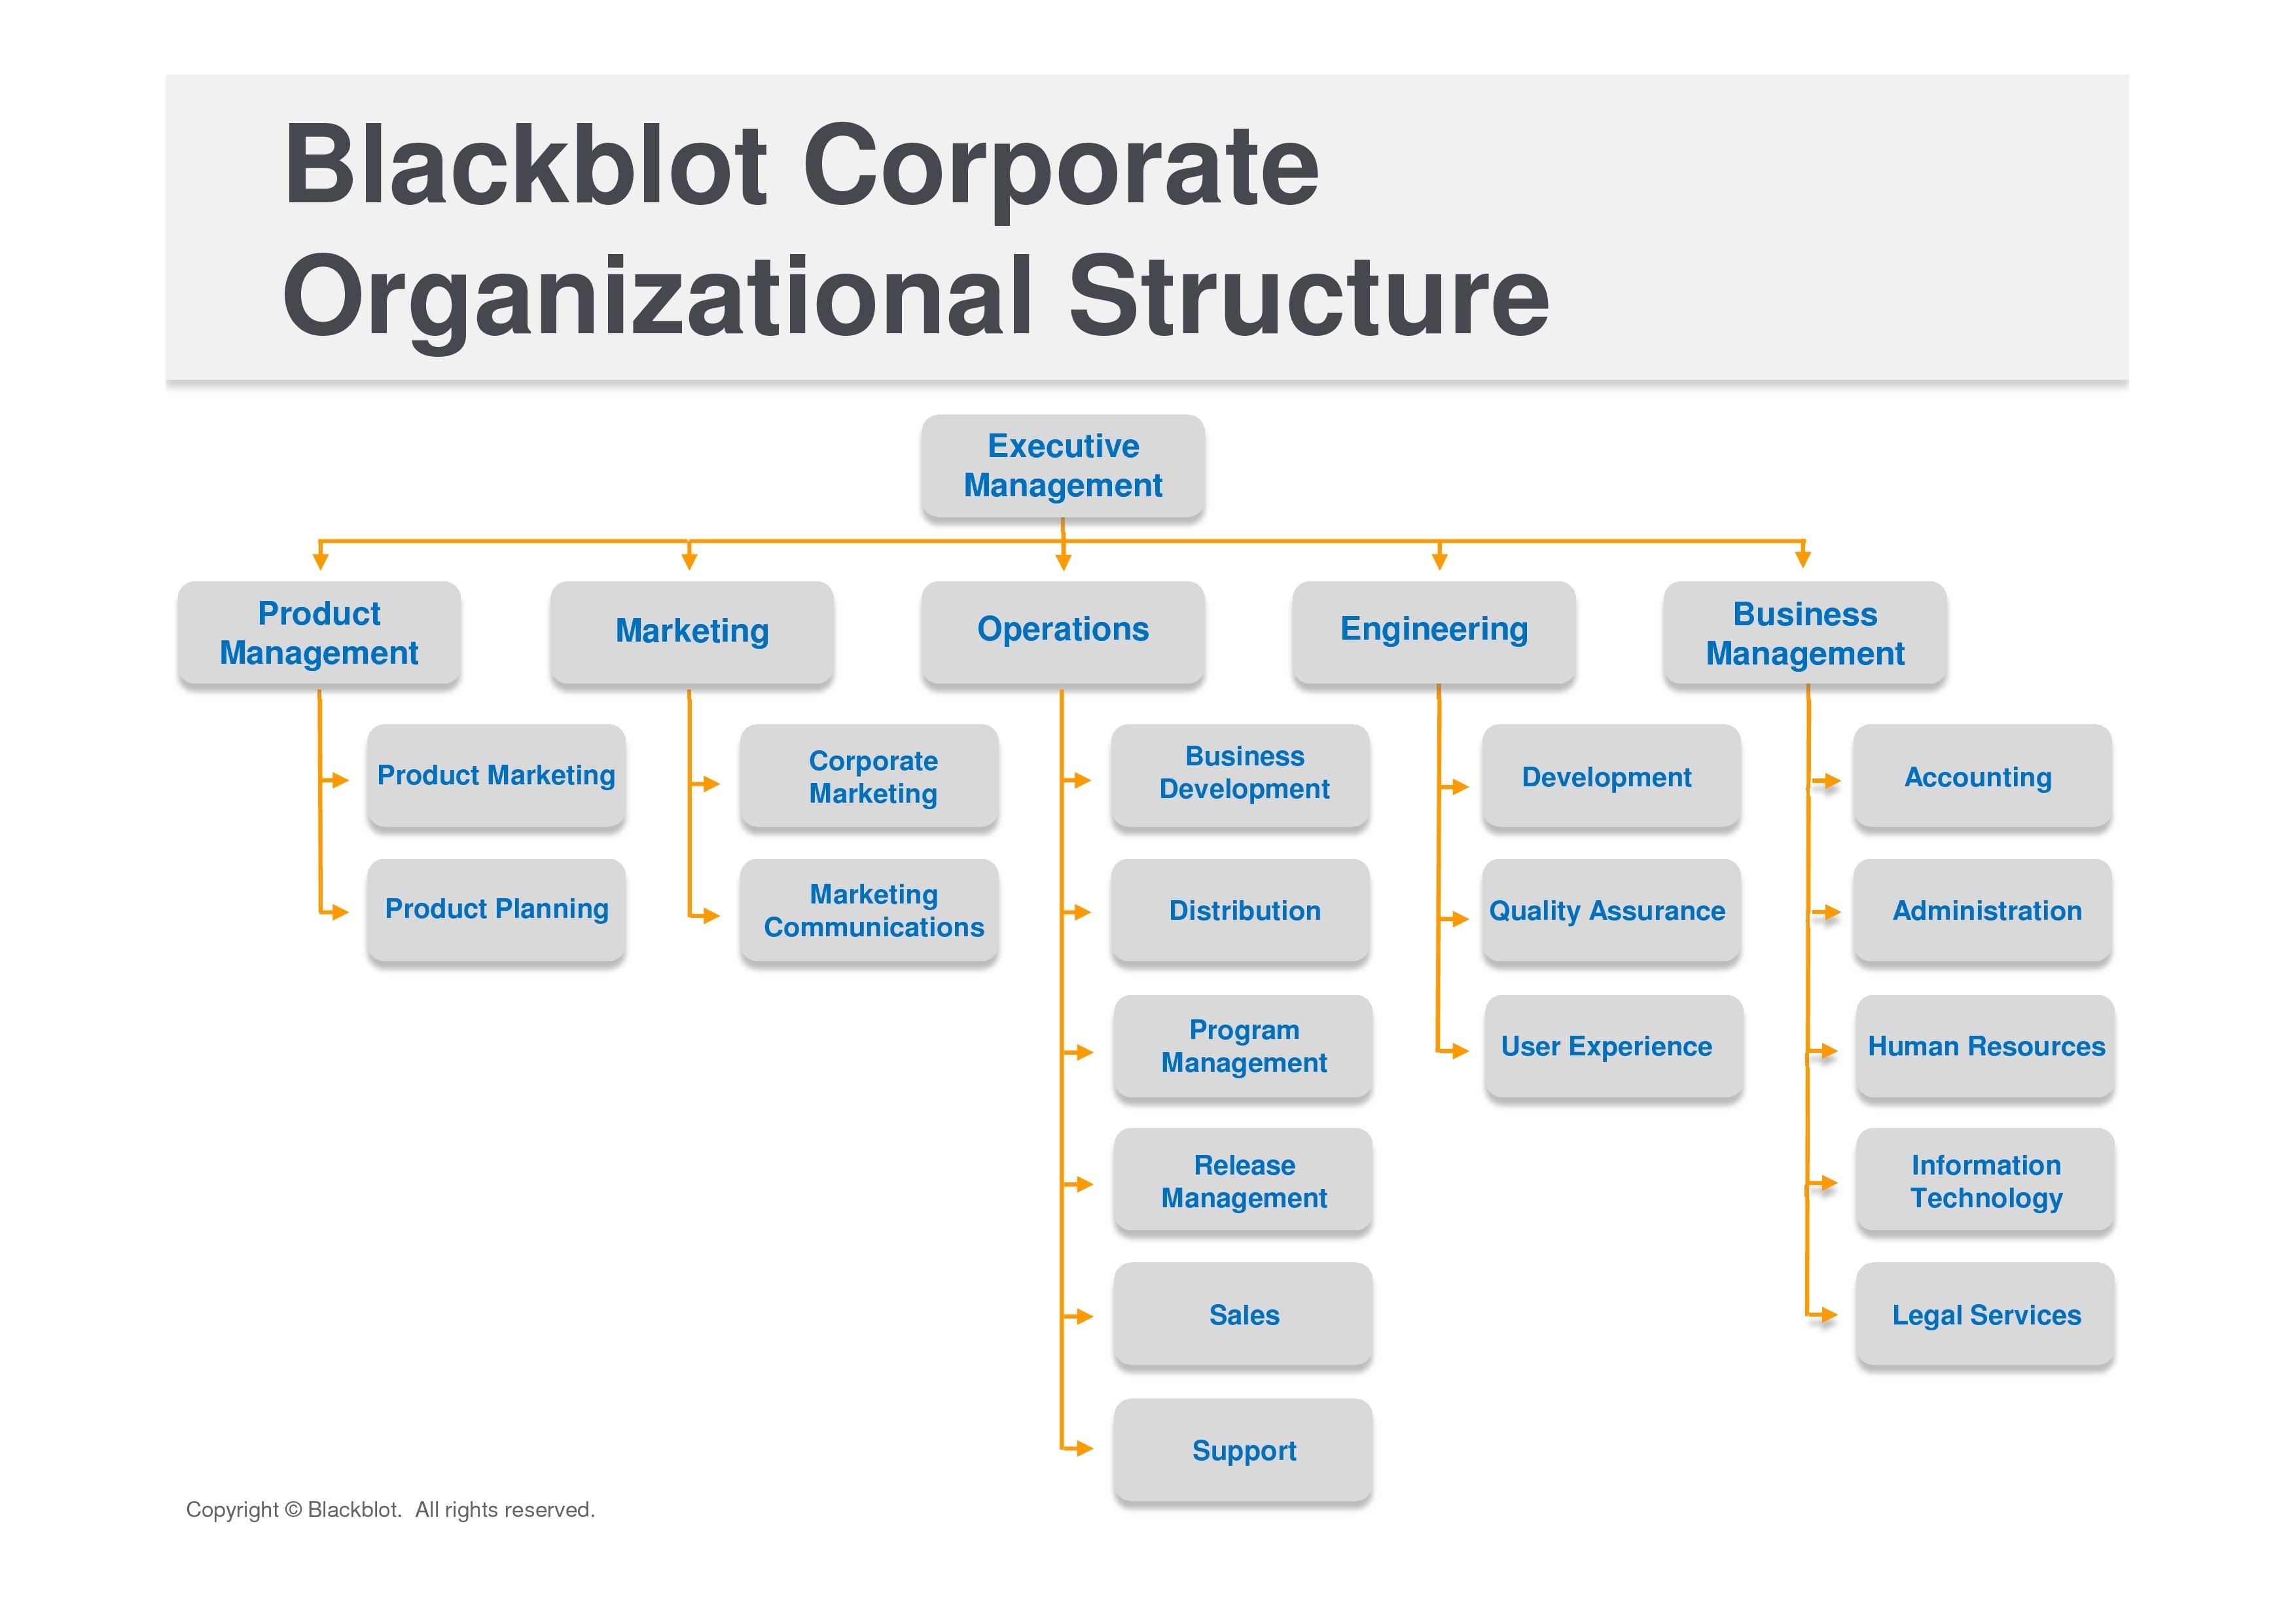 Marketing Department Organizational Chart